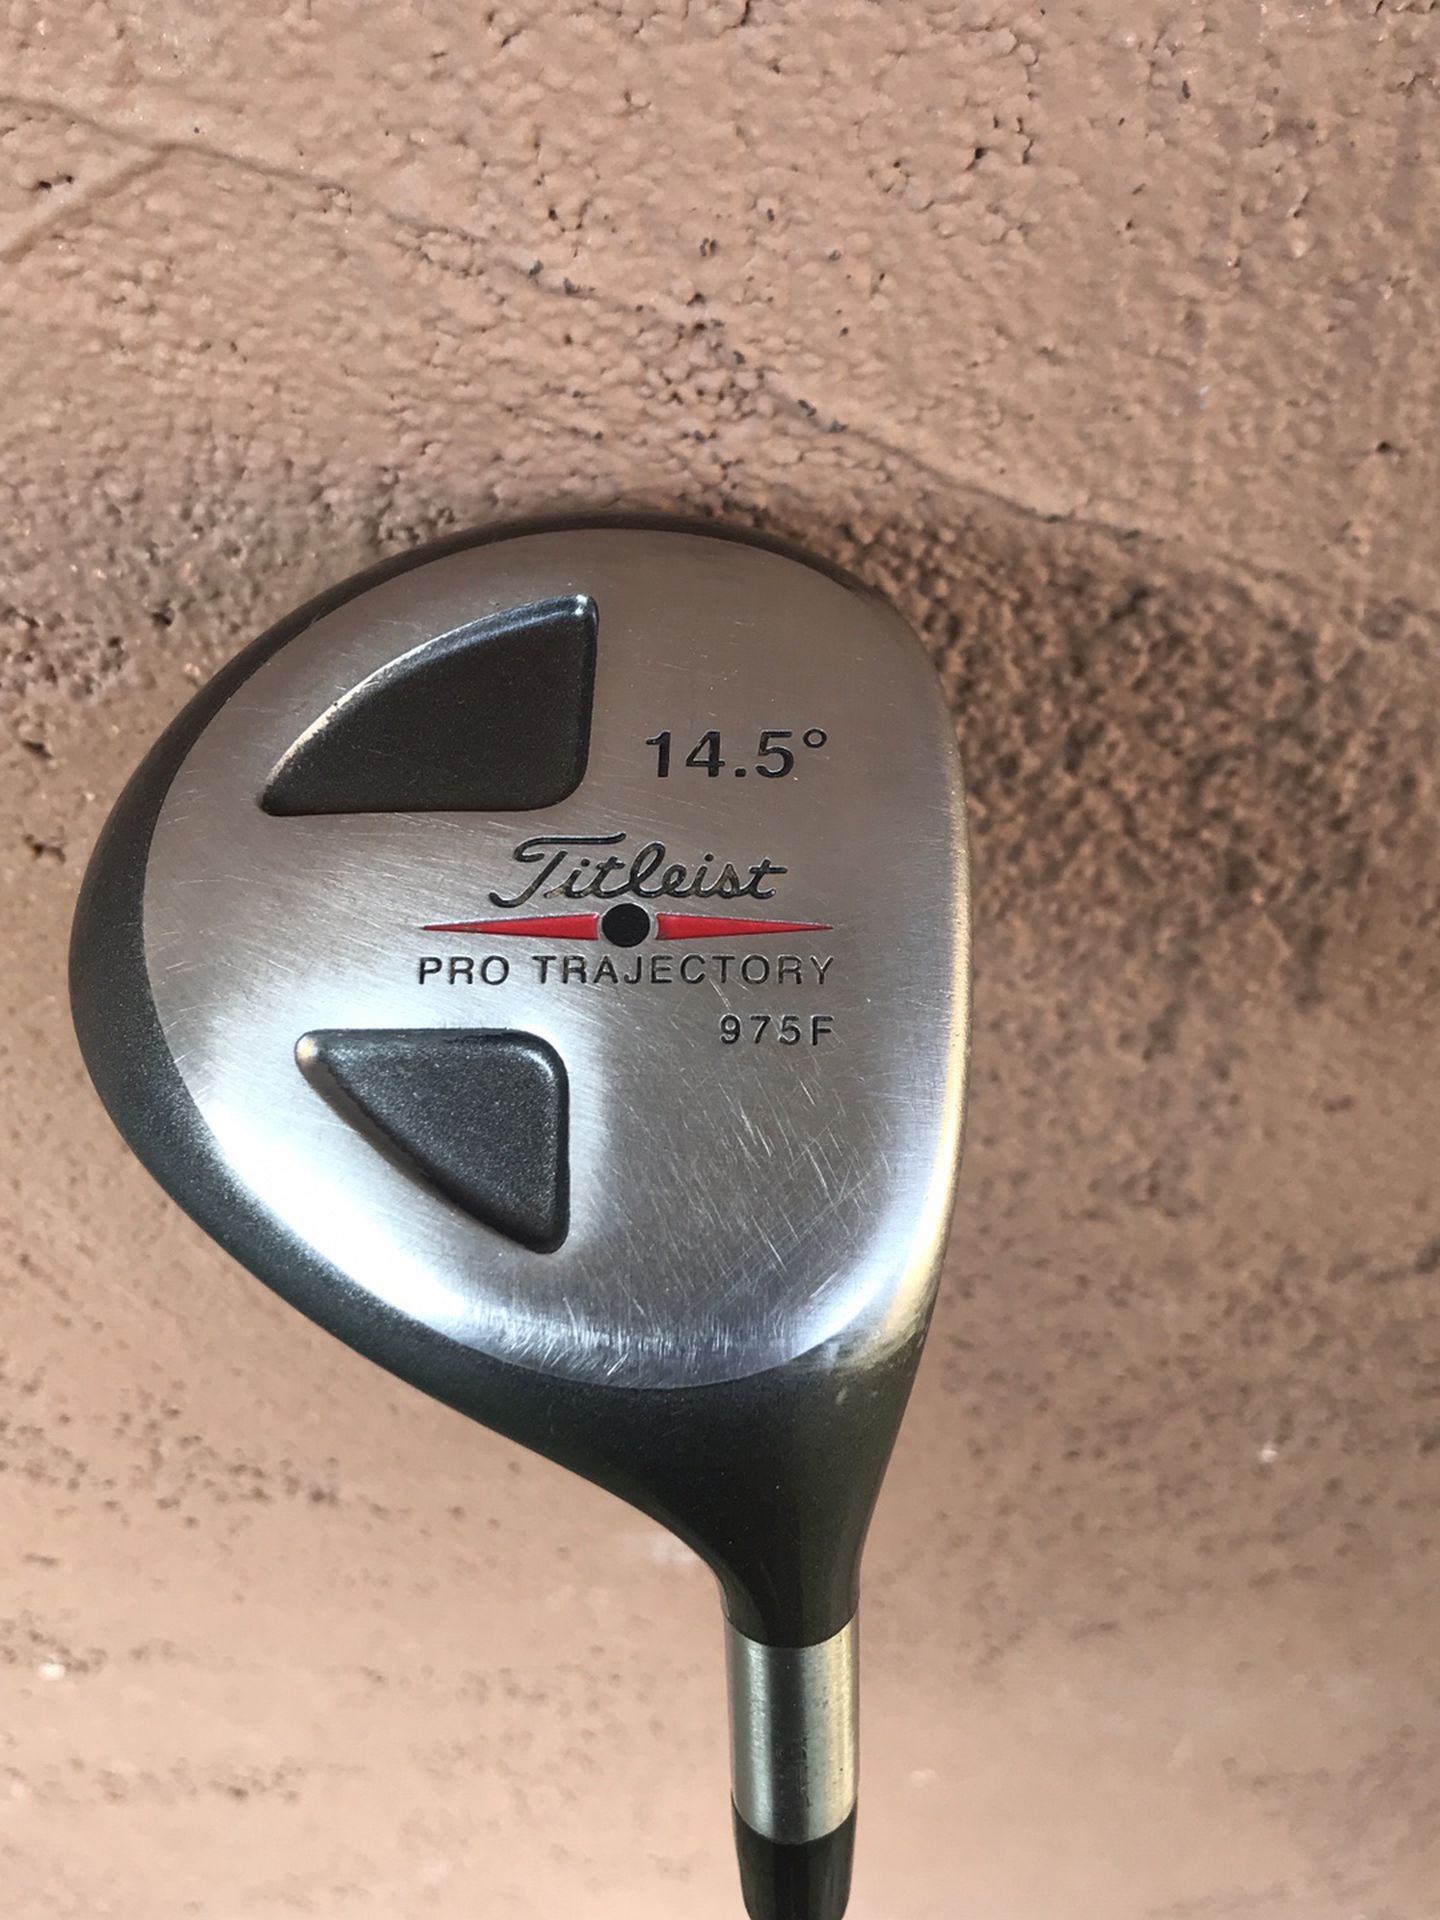 Titleist 975F Pro Trajectory 14.5 Golf Clubs